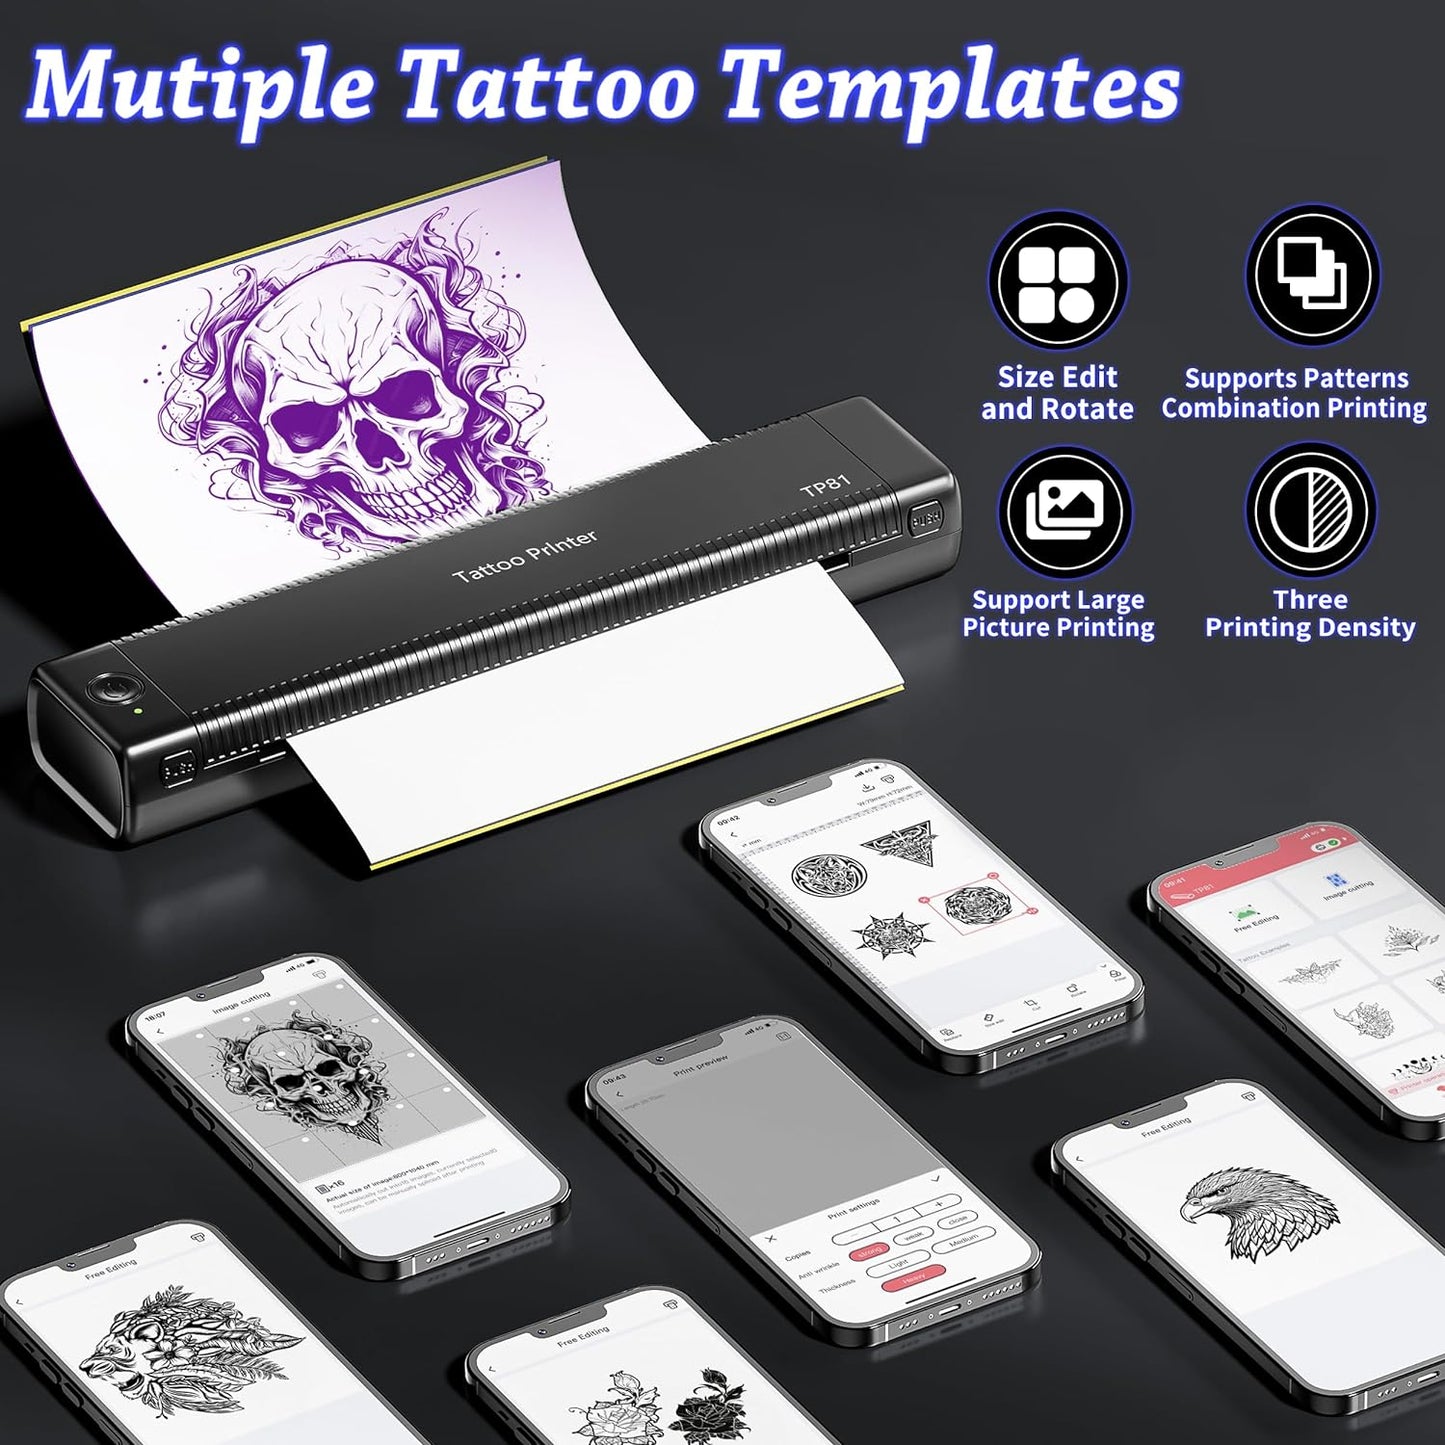 TP81Wireless Bluetooth Tattoo Stencil Printer with 10pcs Tattoo Transfer Paper for Temporary Tattoos